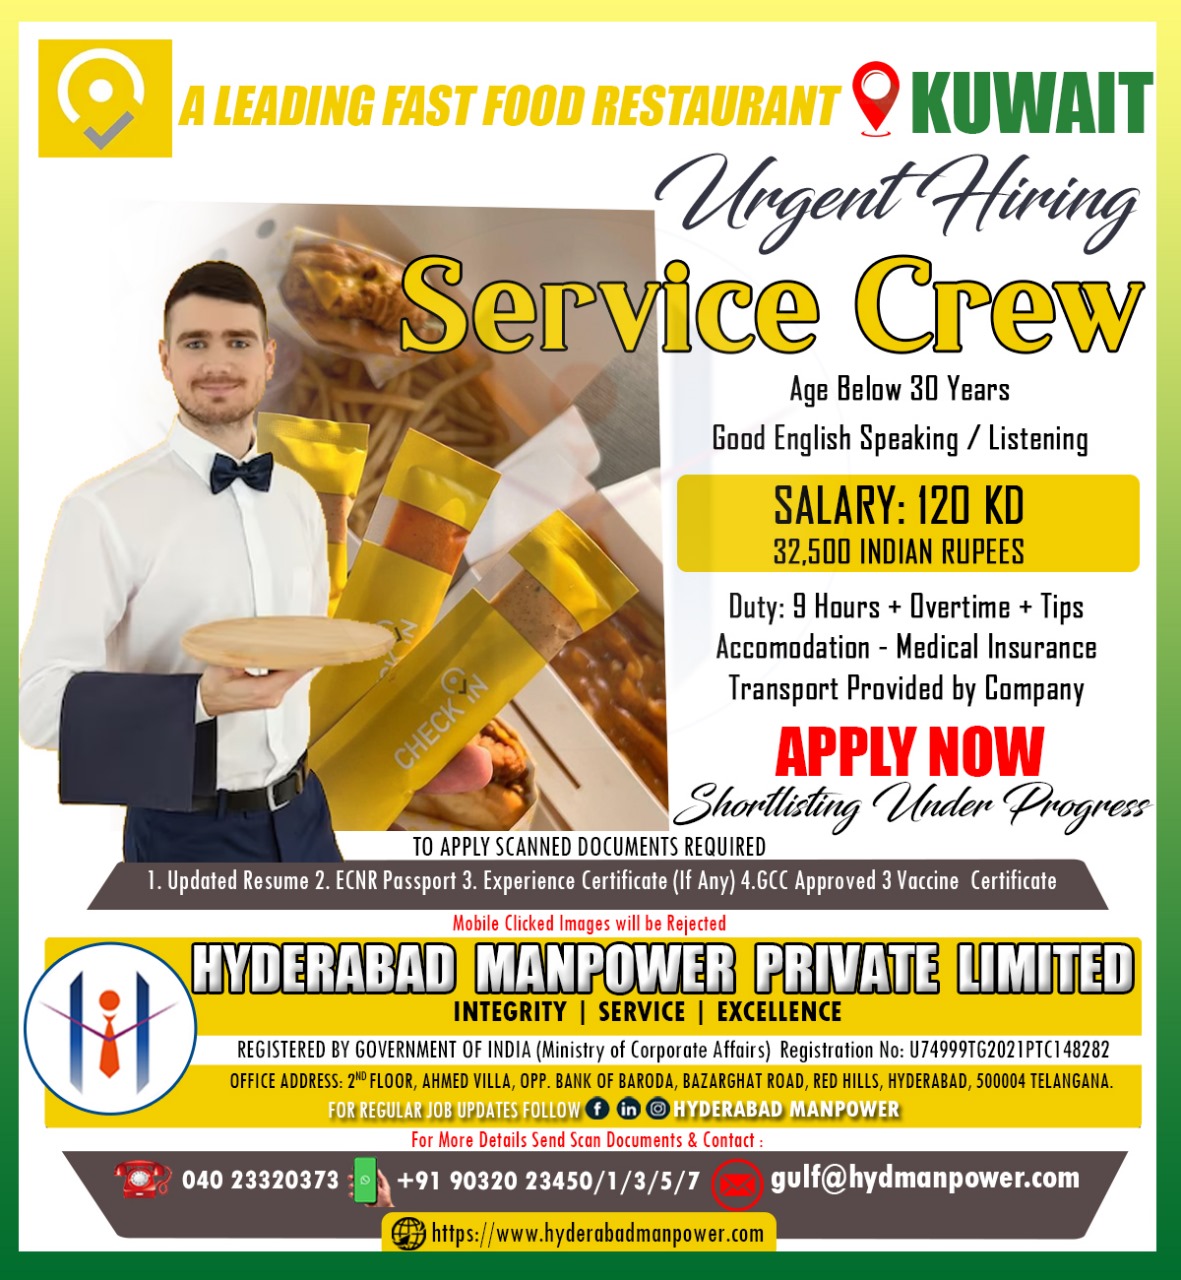 Urgent Hiring Service Crew for Fast Food Restaurant in Kuwait